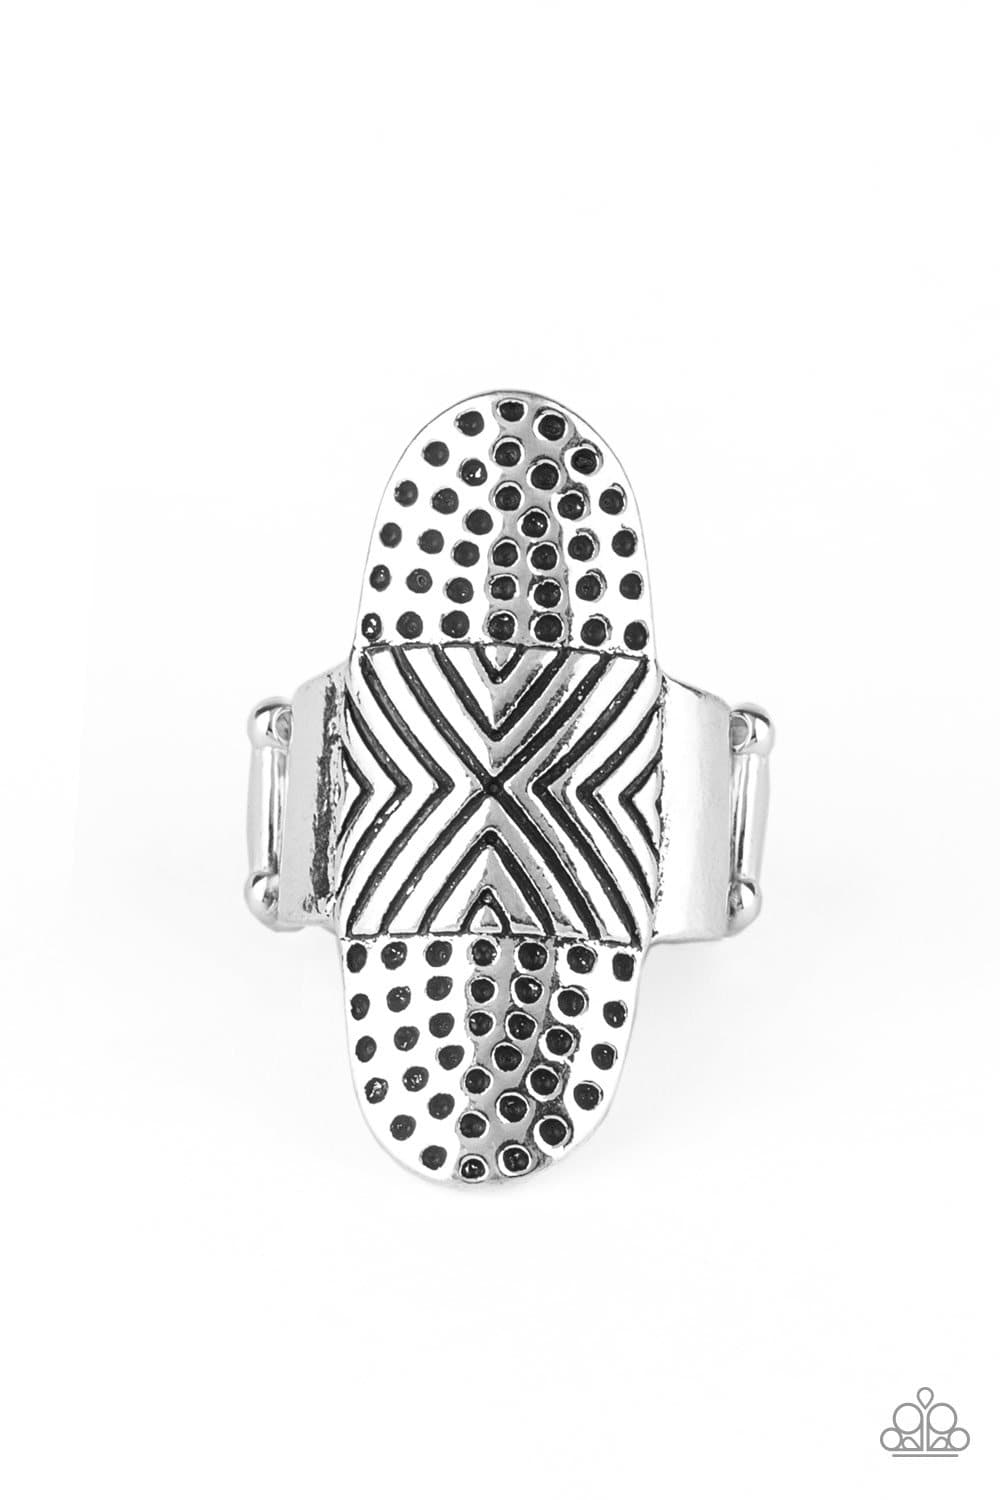 Guru Grunge - Silver Hammered Oval Ring - Paparazzi Accessories - GlaMarous Titi Jewels